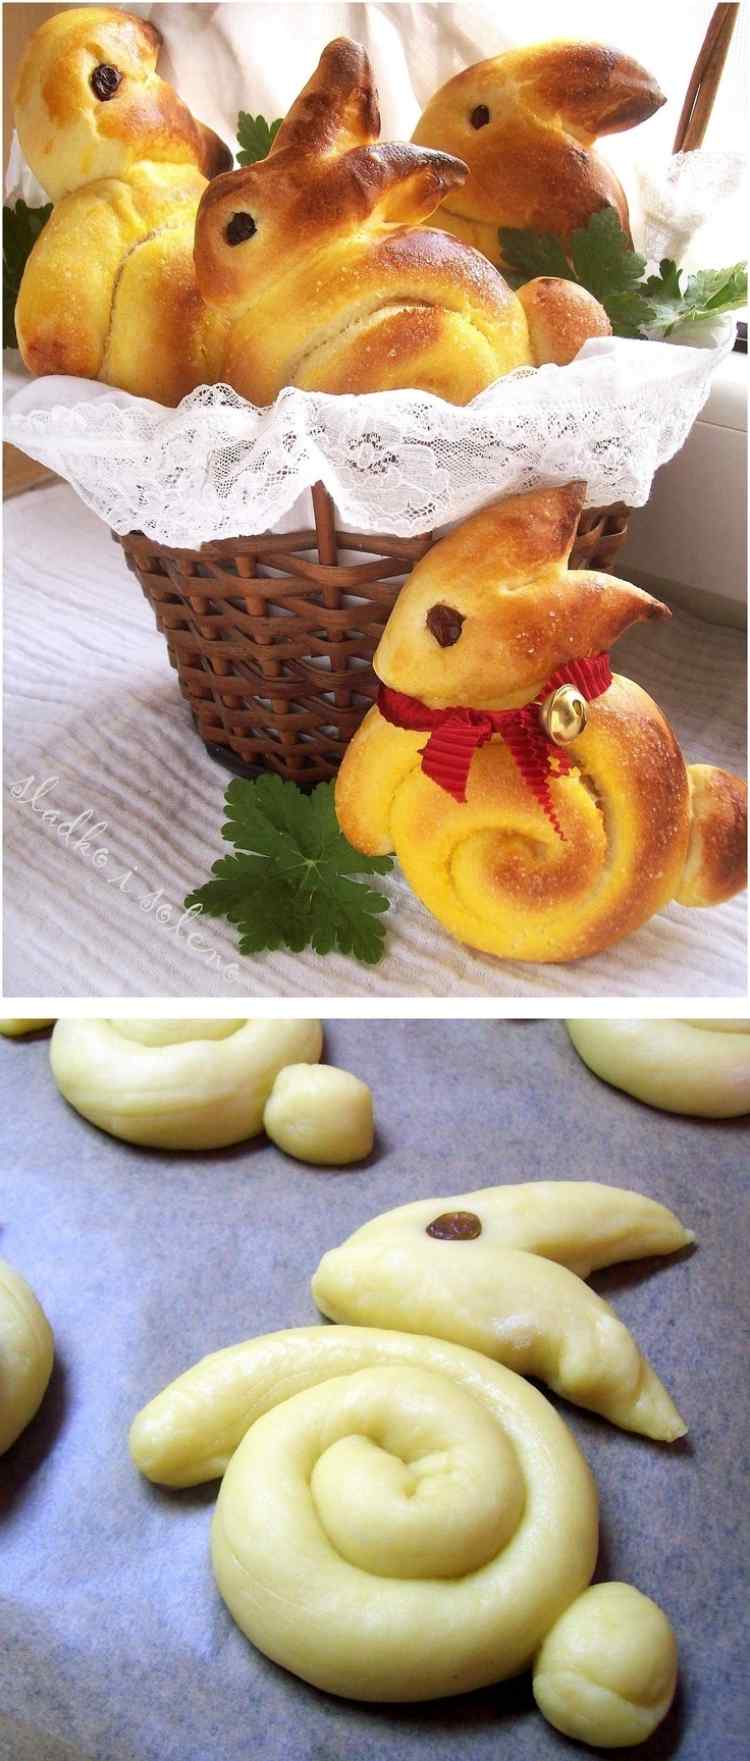 Påskbakat-kaninformat bröd